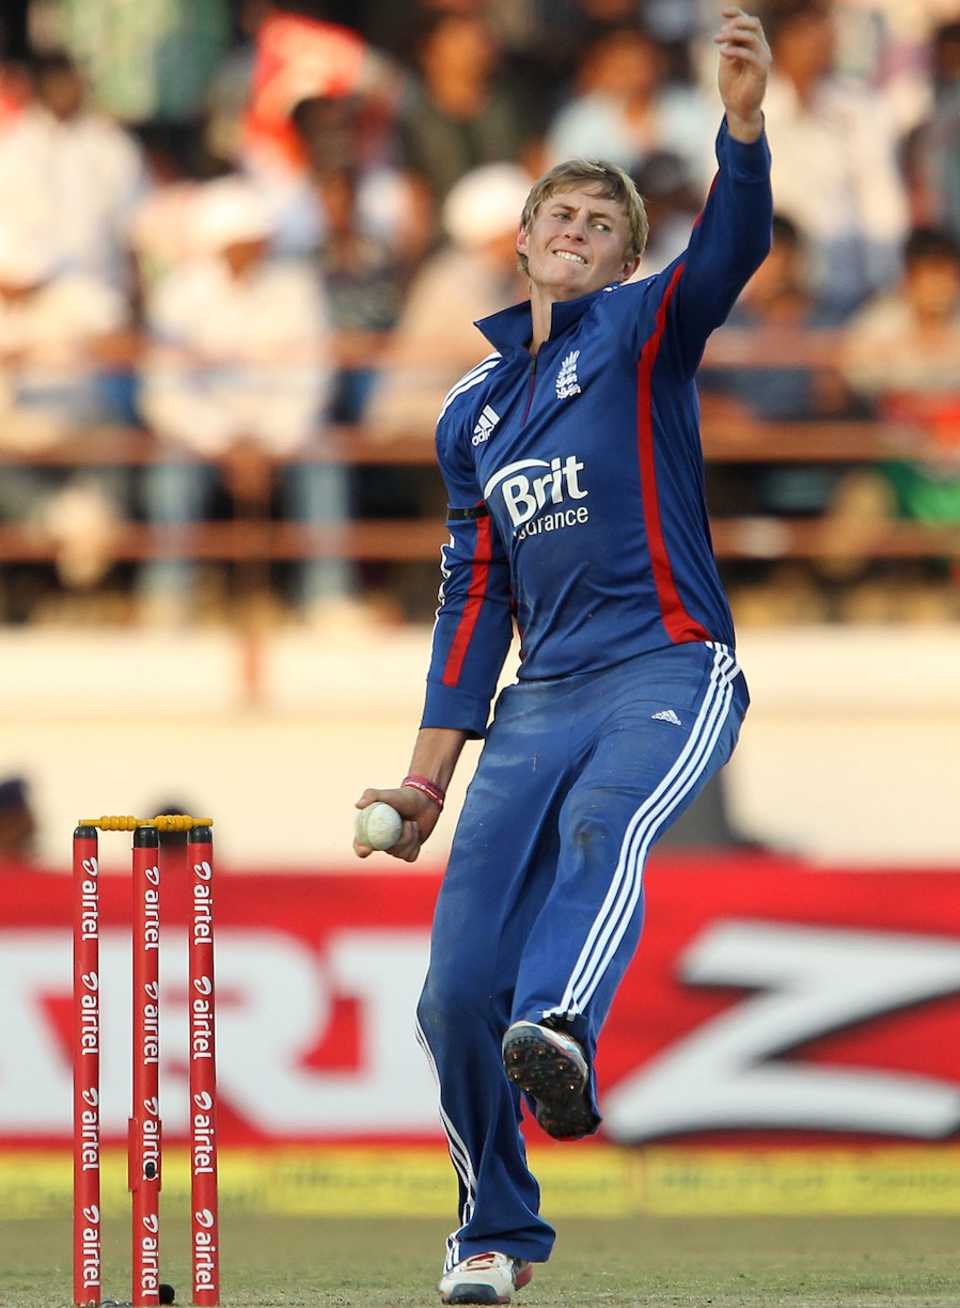 Joe Root bowled a nine-over spell in Rajkot, India v England, 1st ODI, Rajkot, January 11, 2013